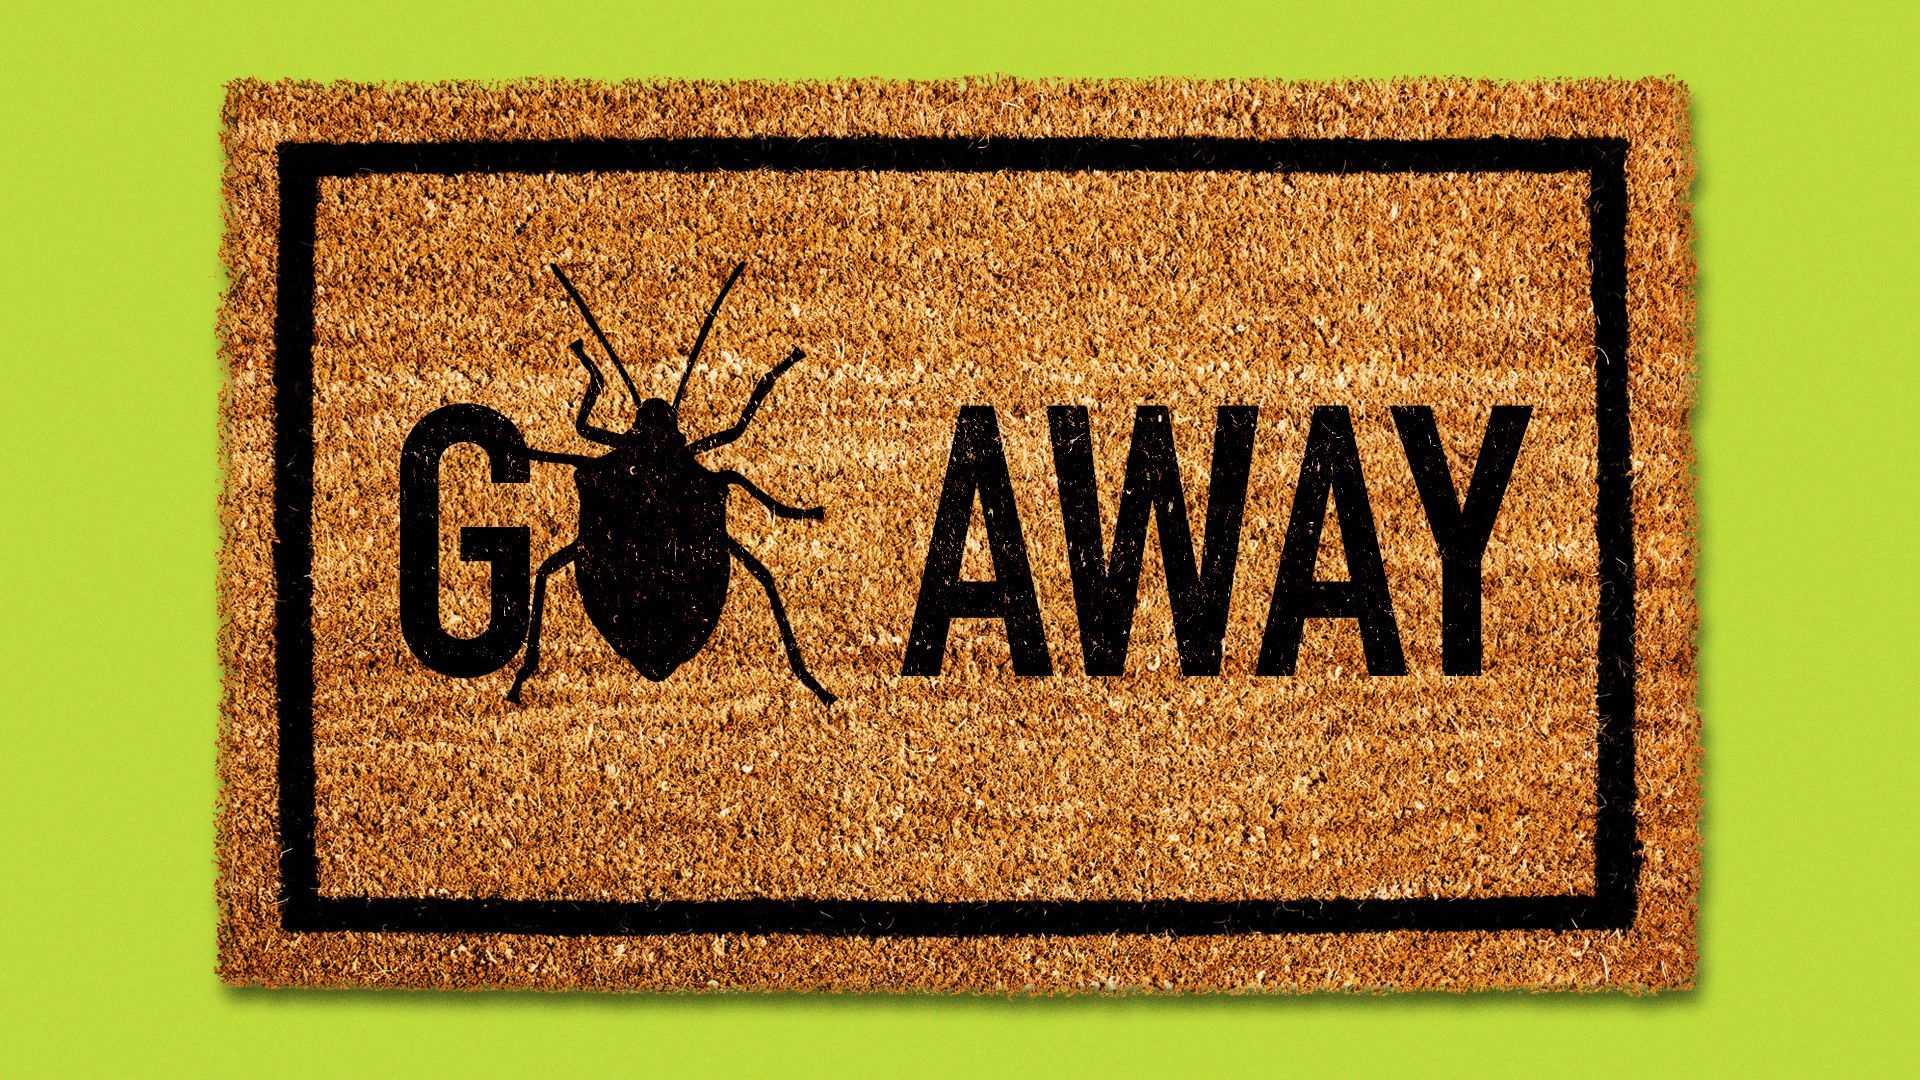 Philadelphia ranks top 3 among worst cities for bed bugs